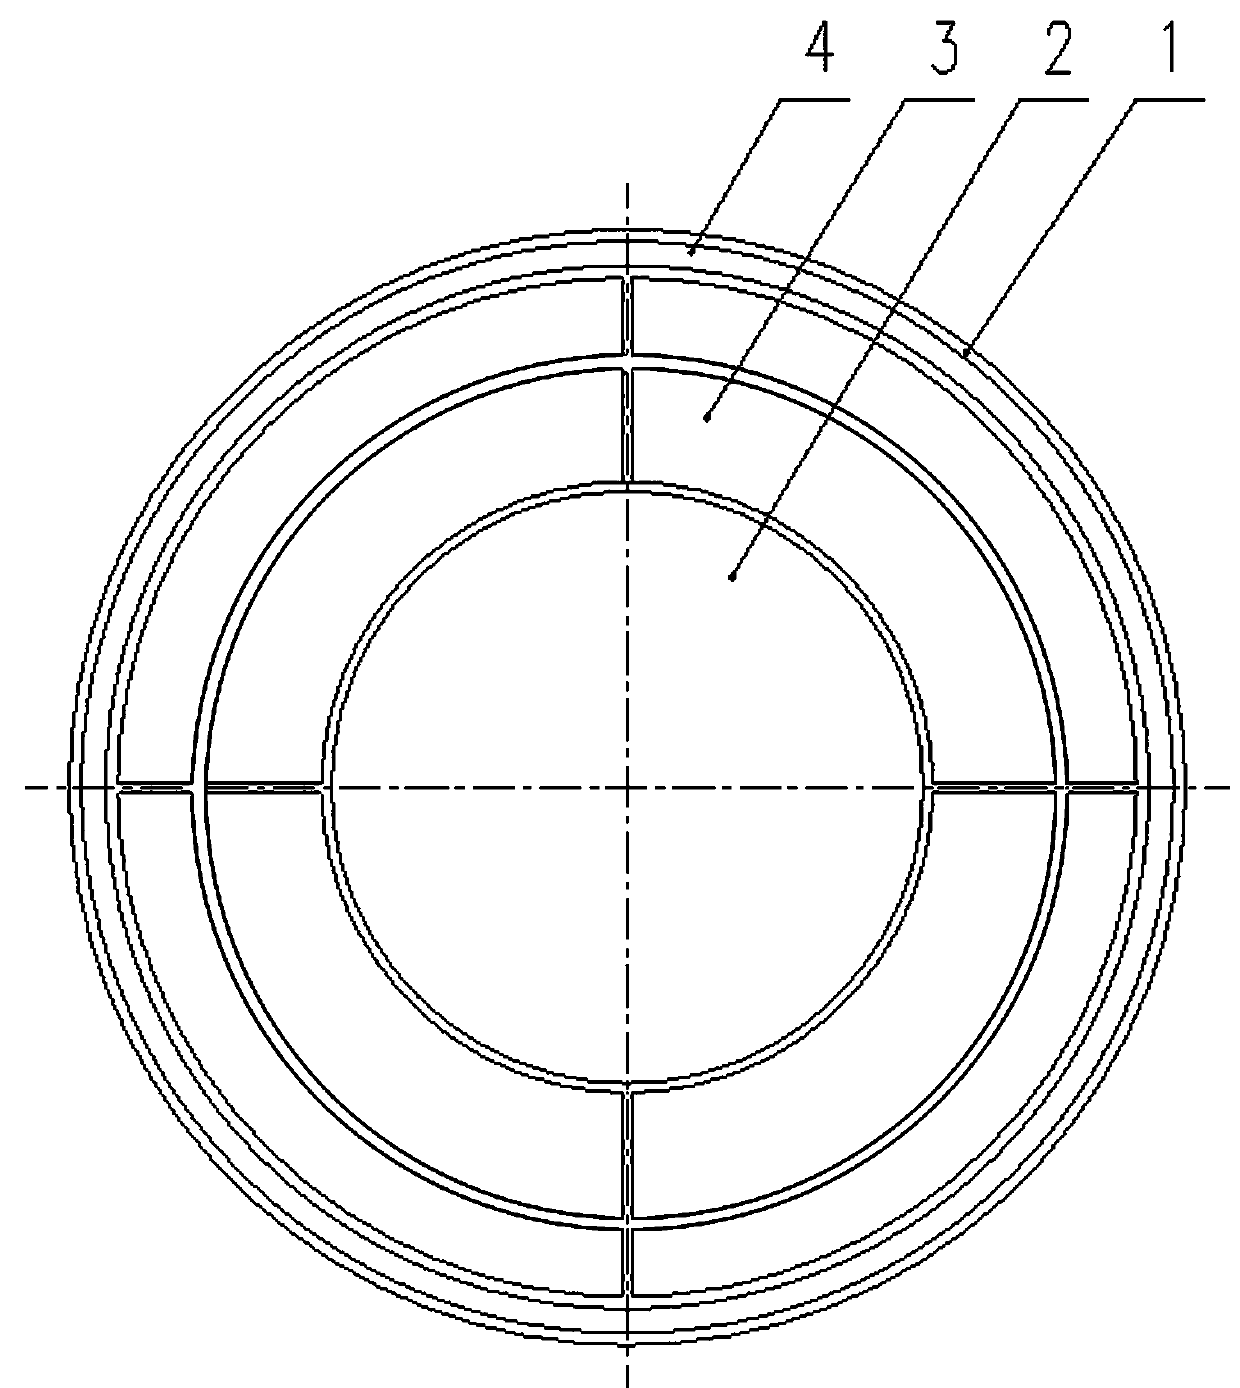 Distribution mode of nonmetal sliding plate of friction pair of bridge bearing